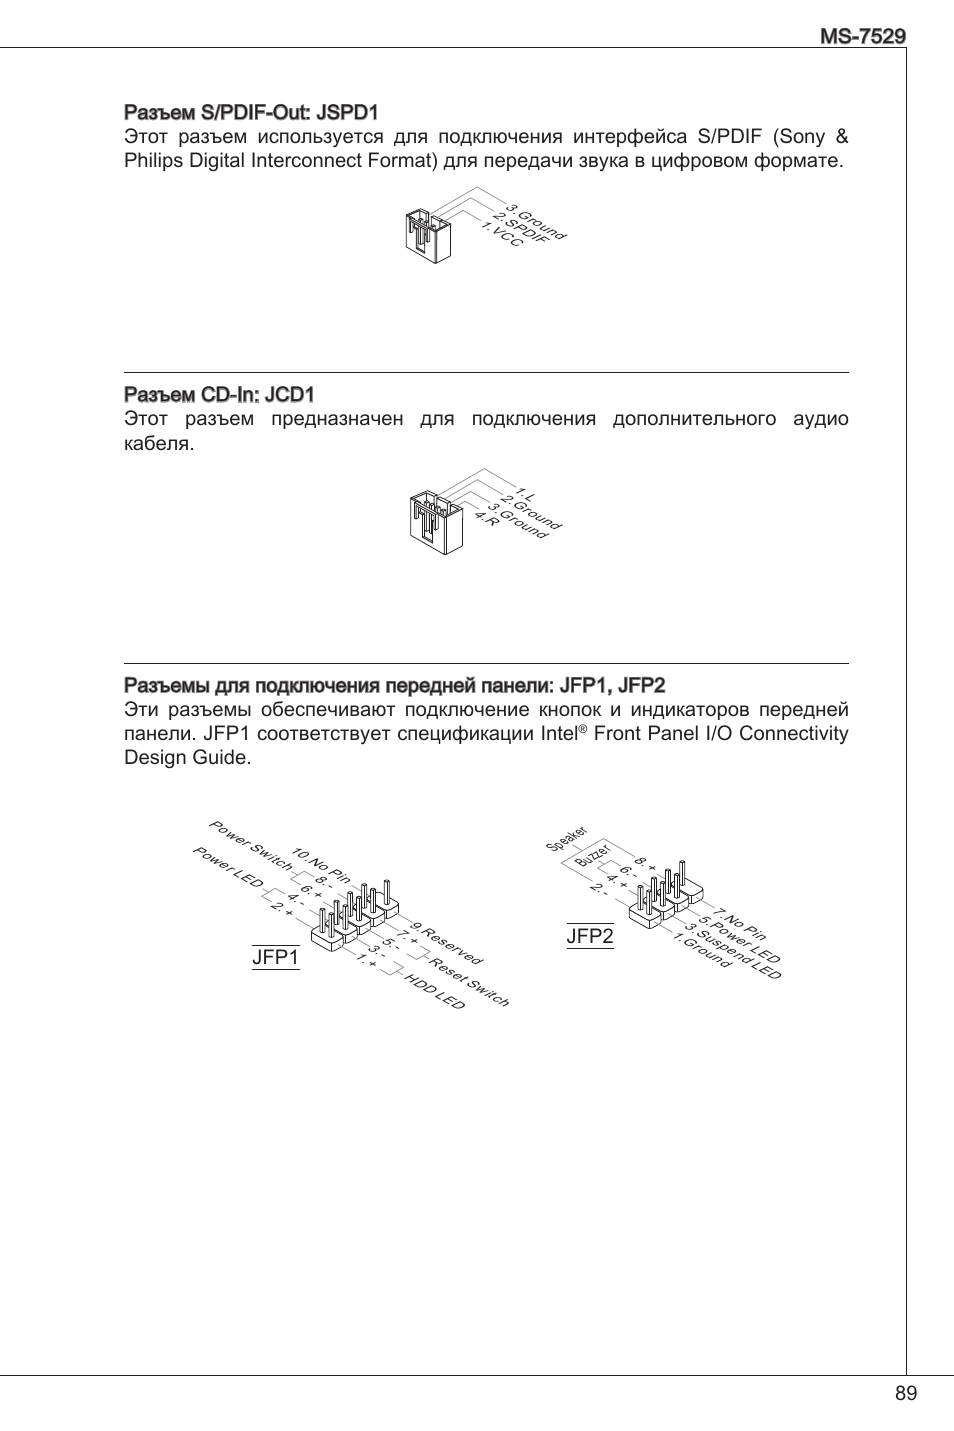 Front panel i/o connectivity design guide, Jfp2 | MSI G31TM-P21 User Manual  | Page 89 / 153 | Original mode